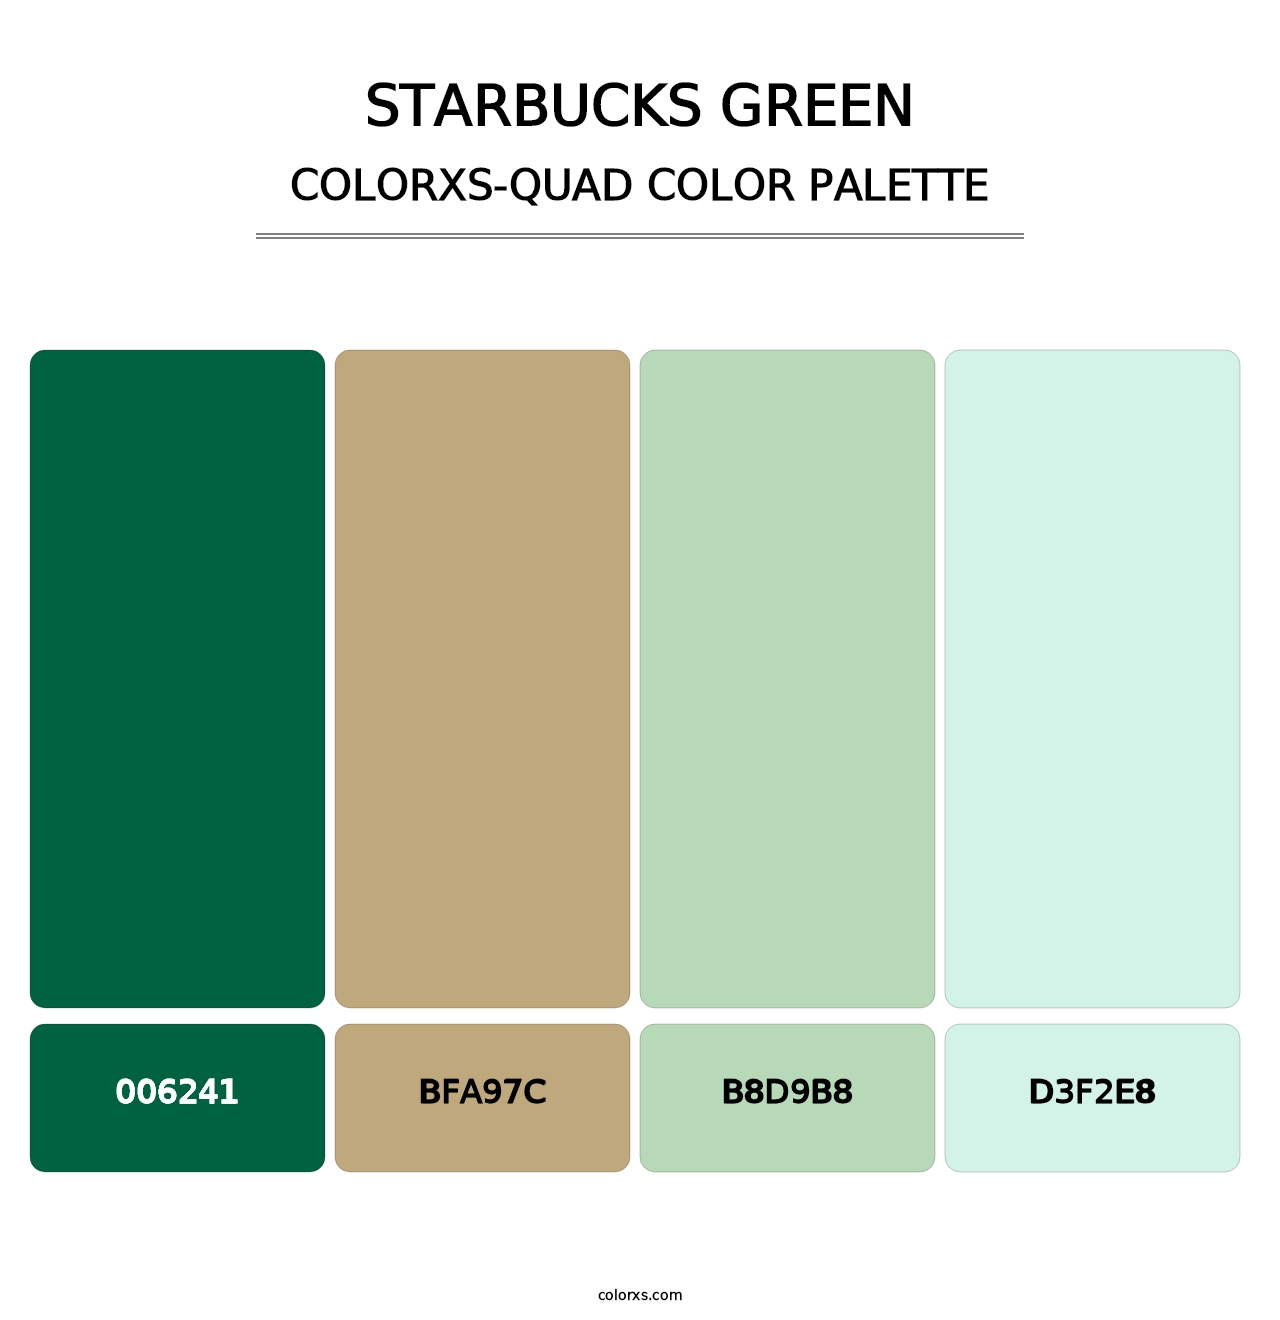 Starbucks Green - Colorxs Quad Palette